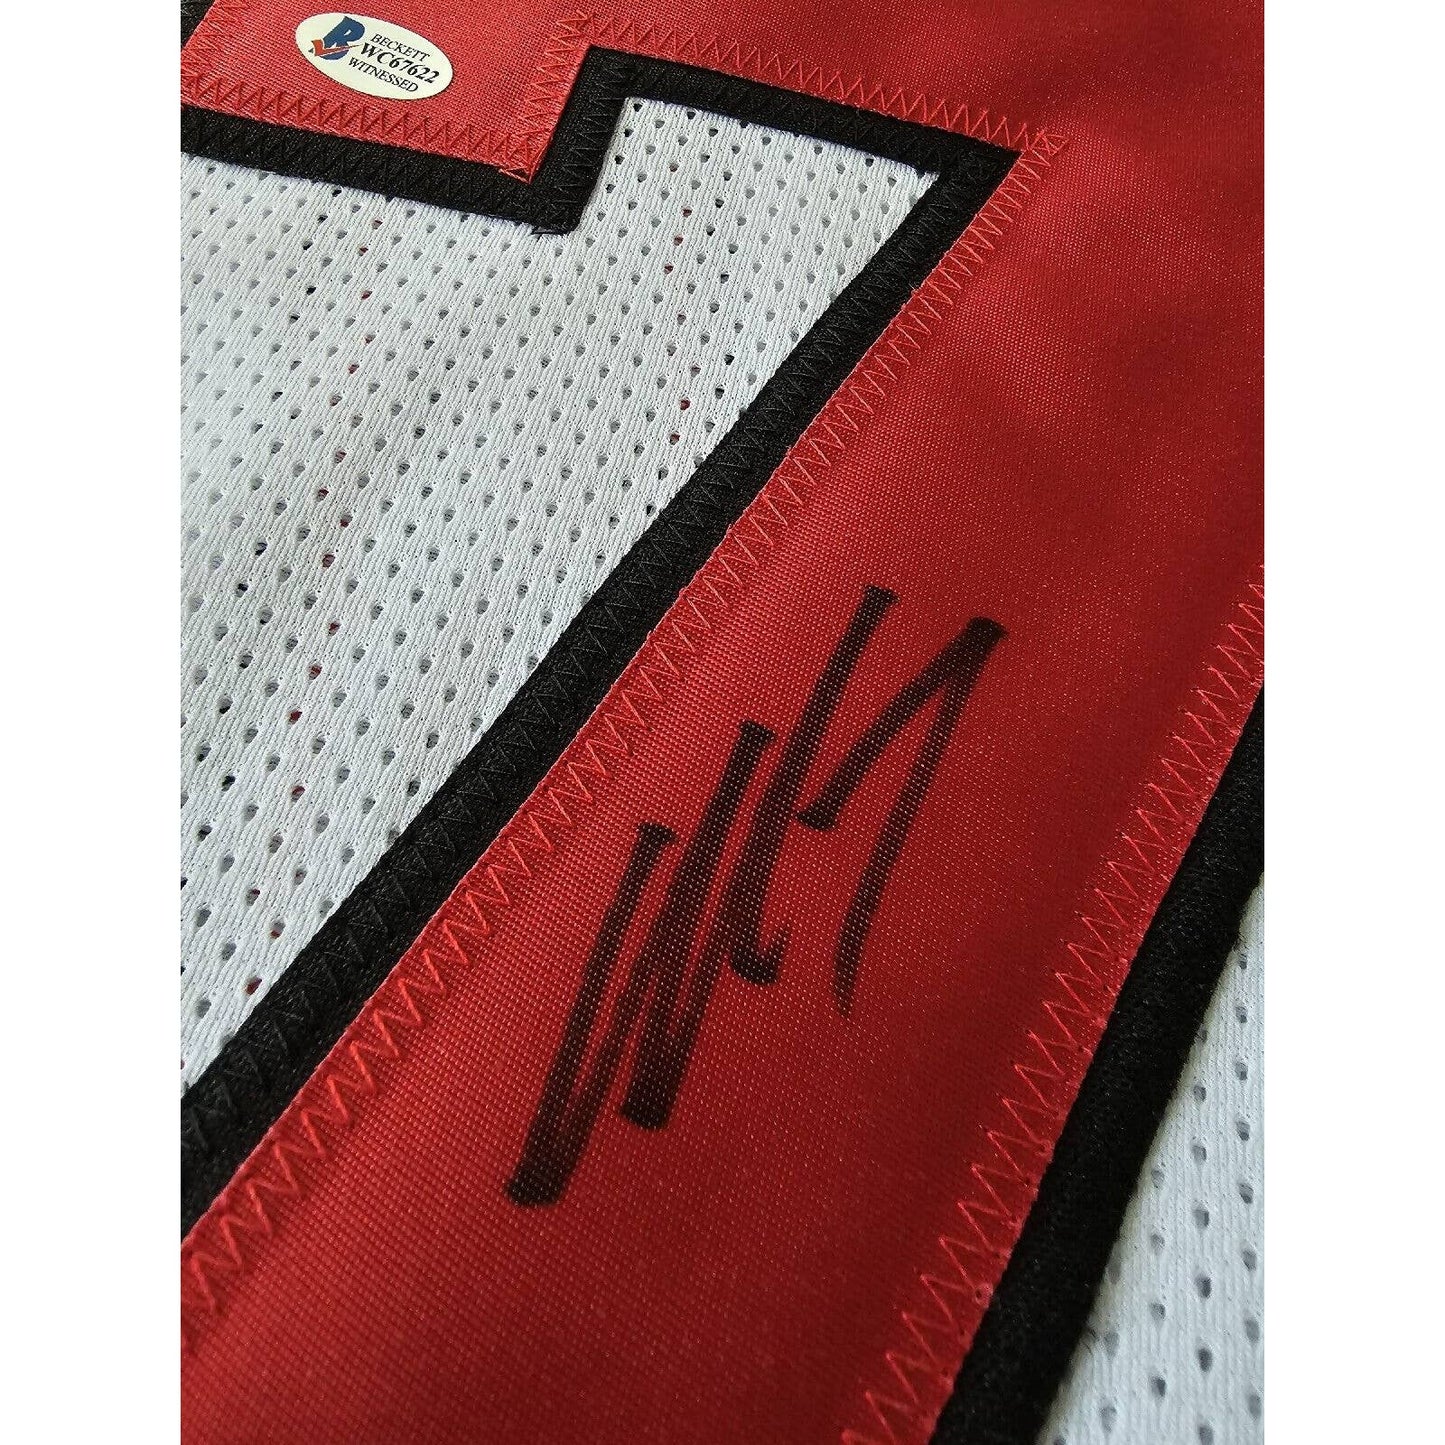 Michael Vick Autographed/Signed Jersey COA Atlanta Falcons Virginia Tech Mike